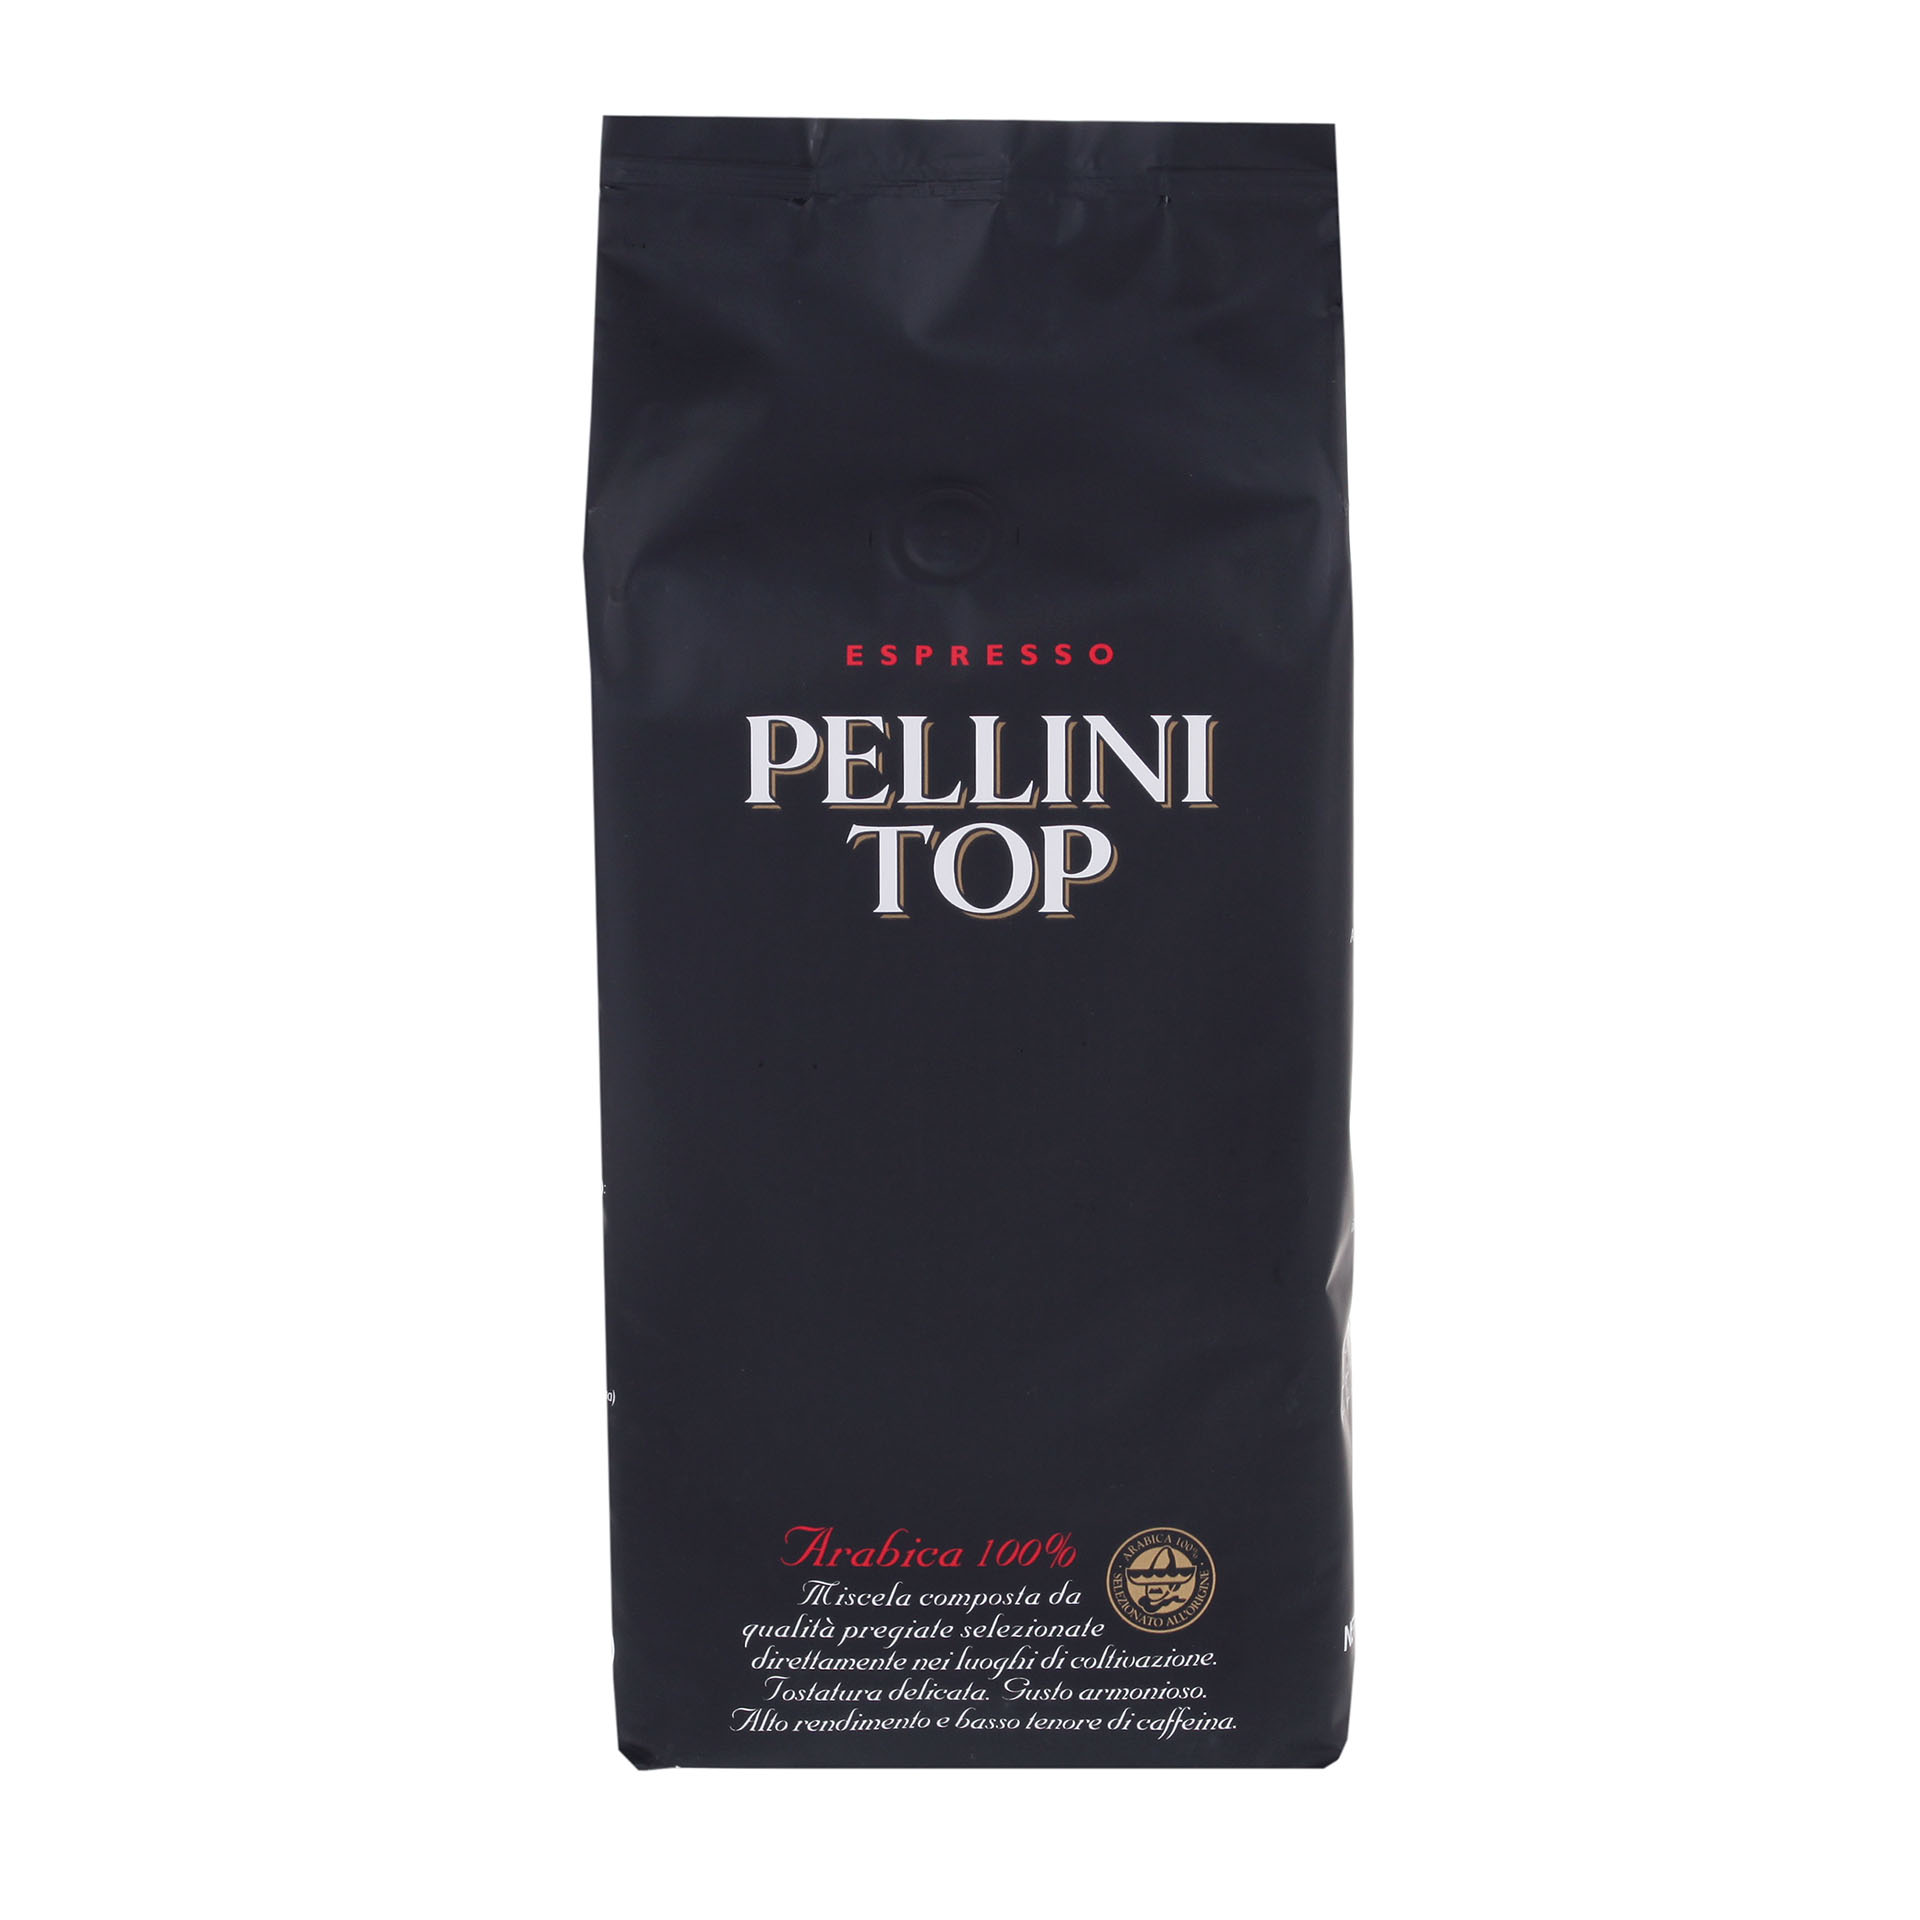 Pellini-TOP Espresso